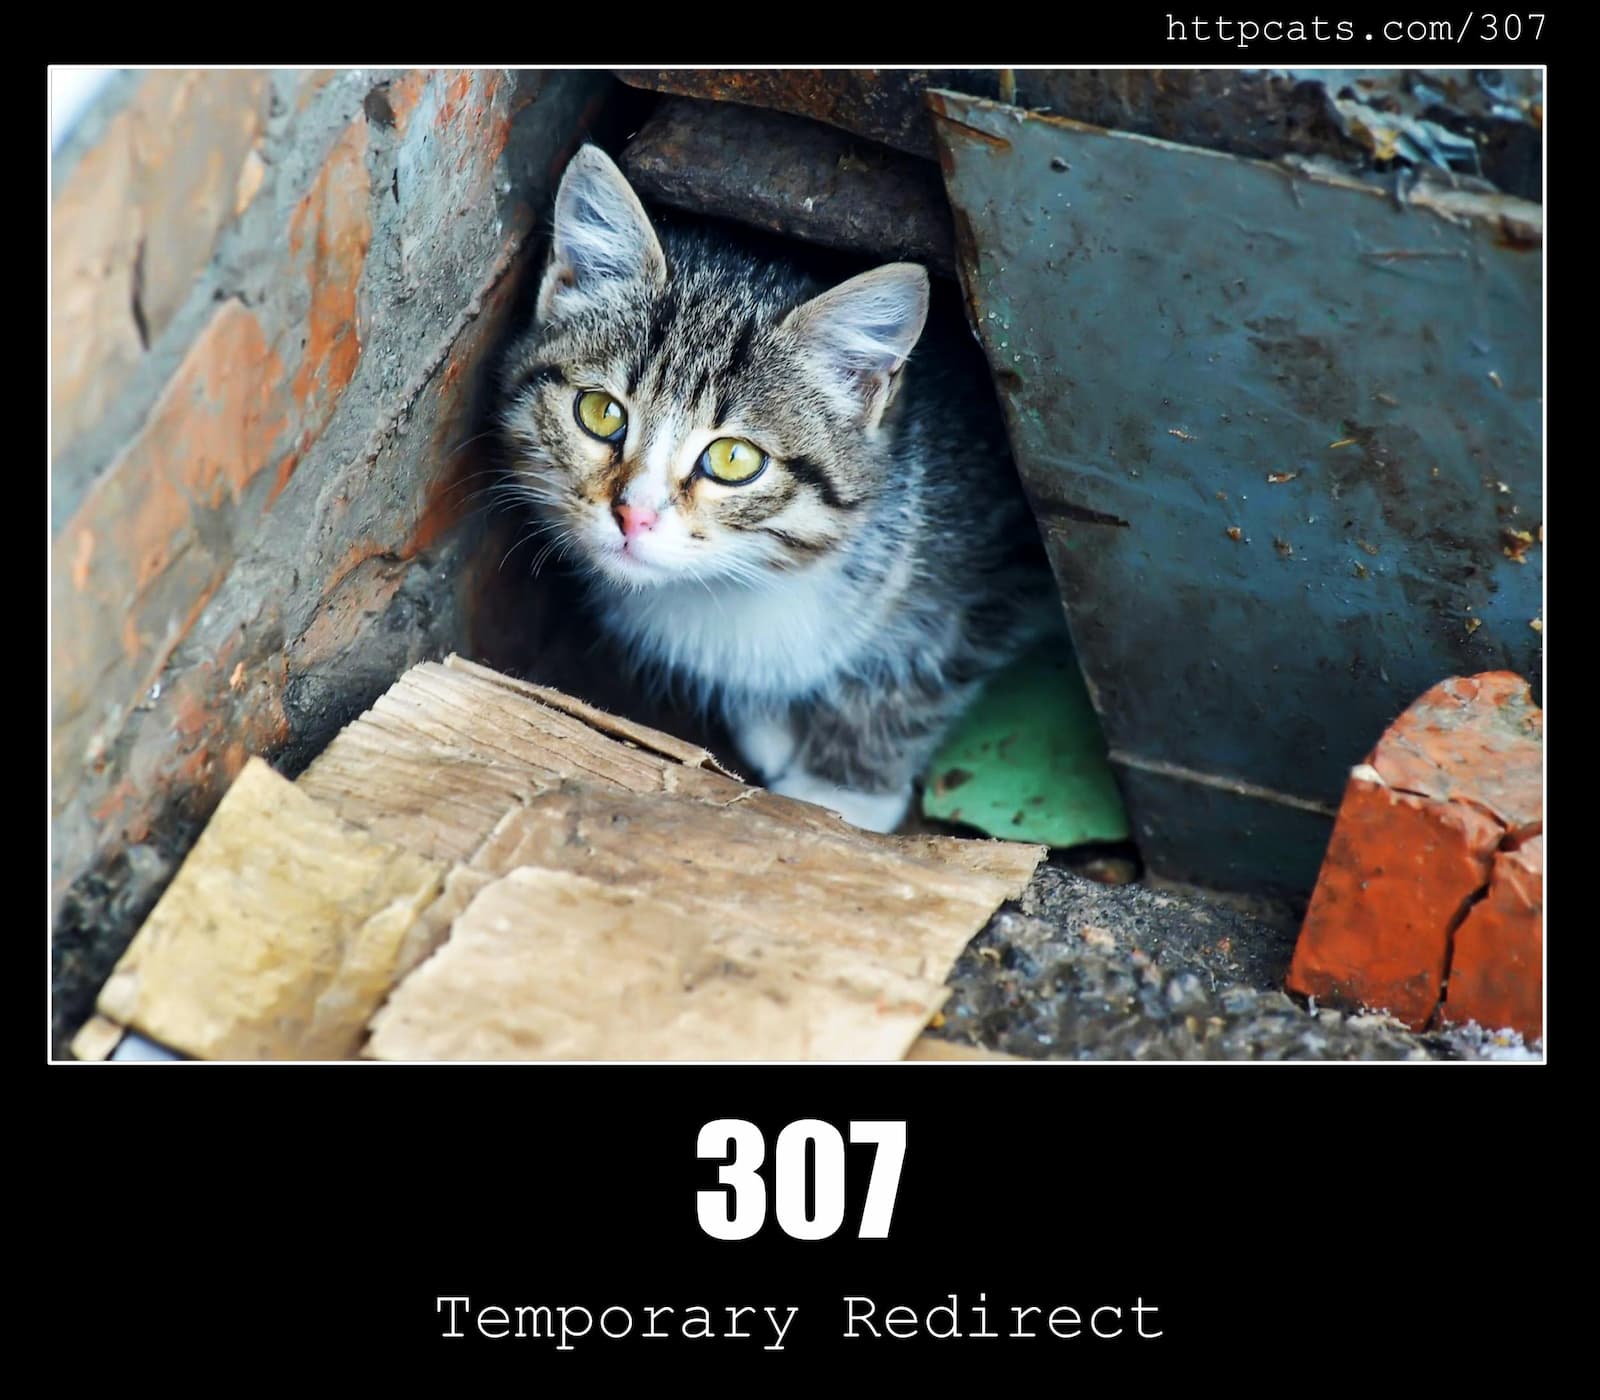 HTTP Status Code 307 Temporary Redirect & Cats